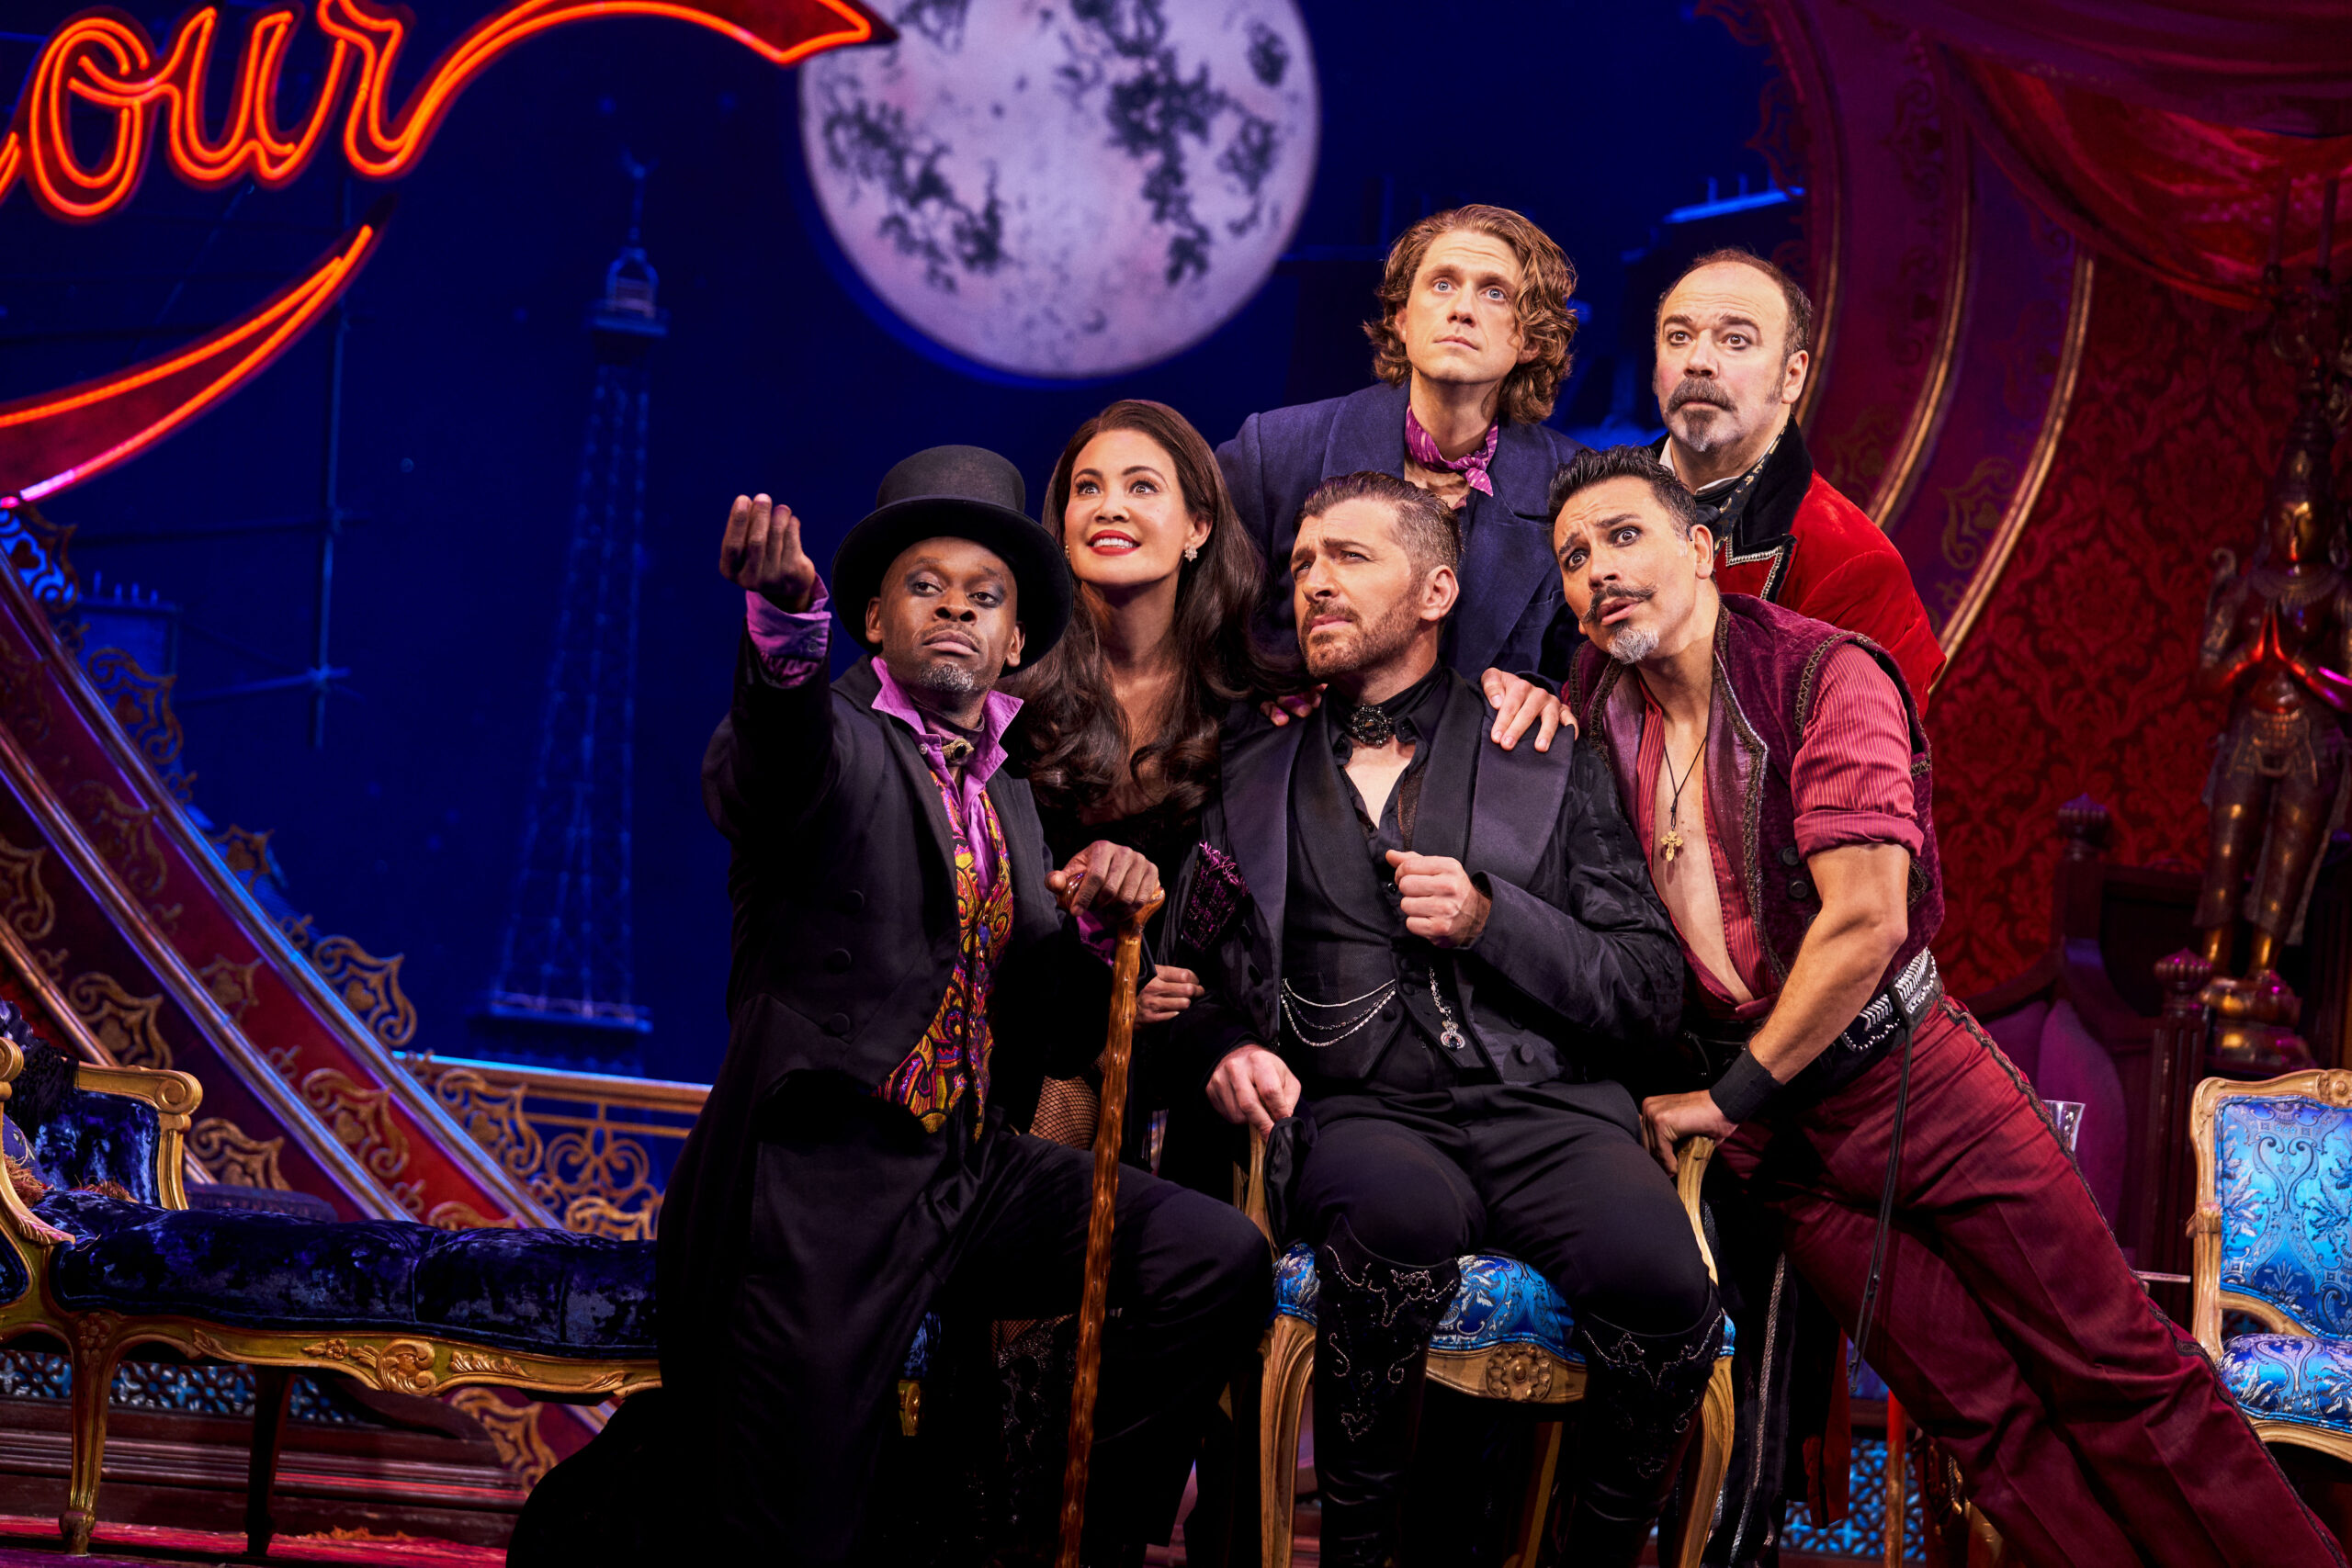 Sahr Ngaujah, Natalie Mendoza, Tam Mutu, Ricky Rojas, Aaron Tveit and Danny Burstein in Moulin Rouge! The Musical. Photo by Matthew Murphy.